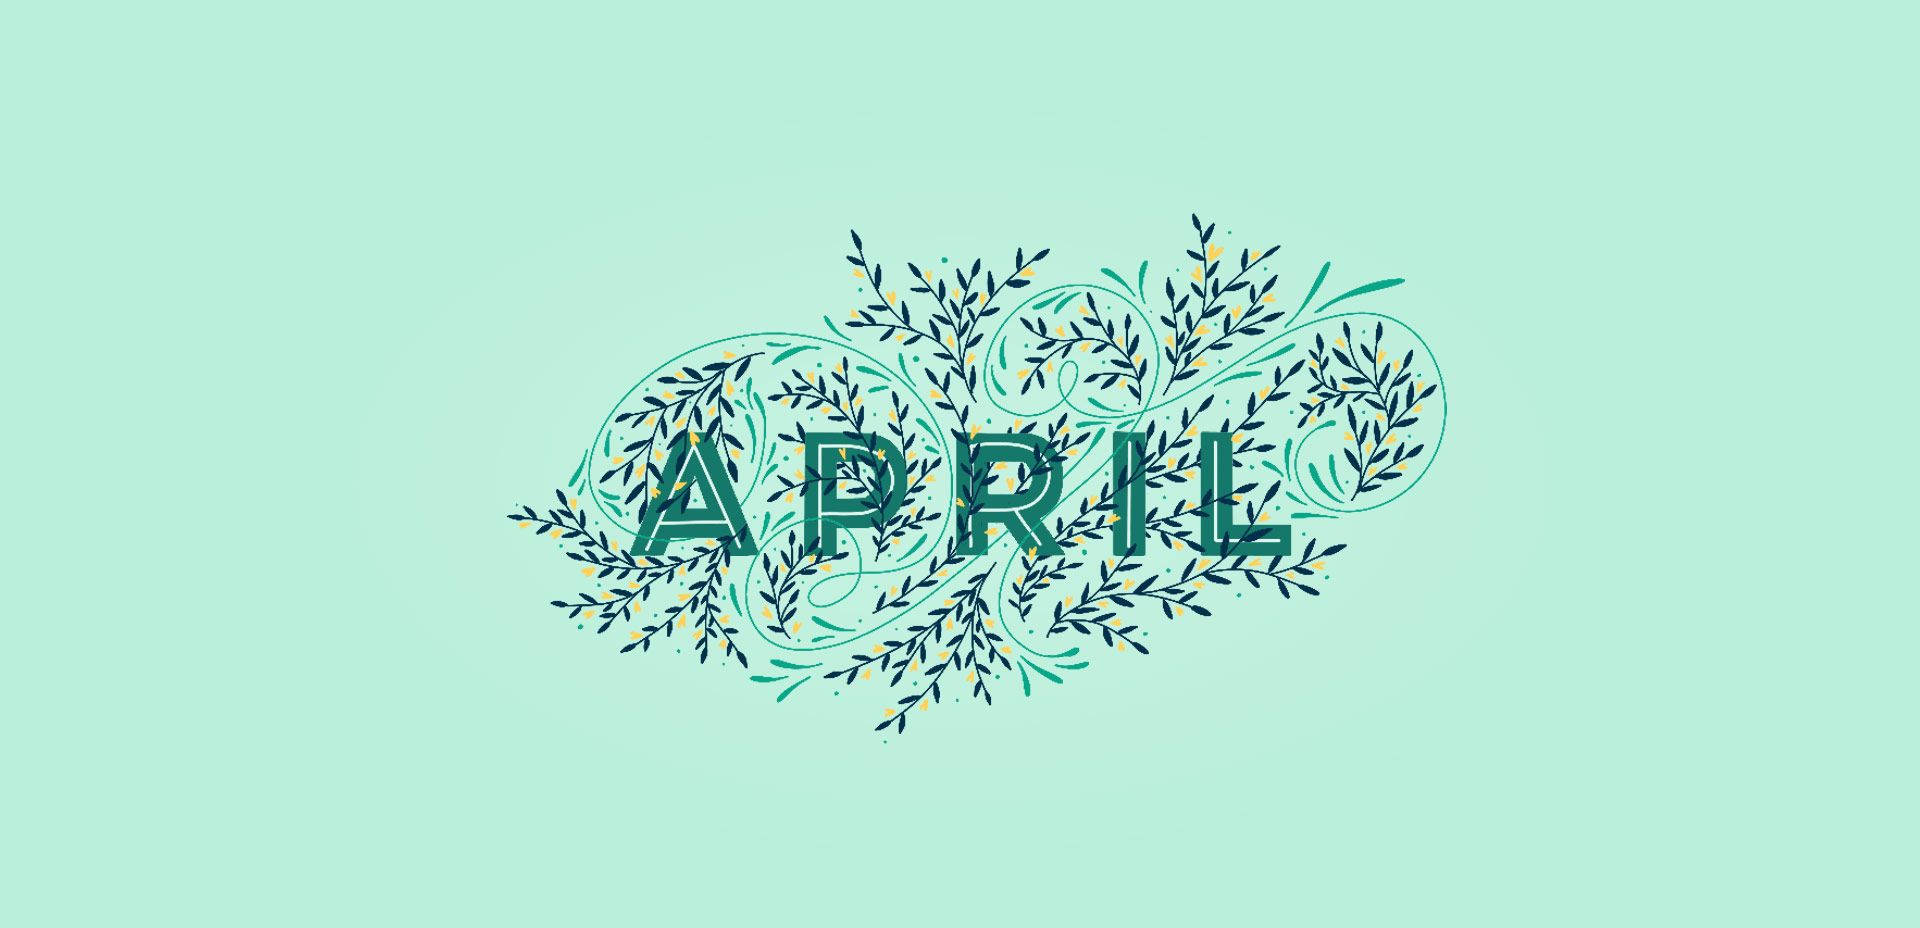 Celebrate April with a green splash of joy! Wallpaper